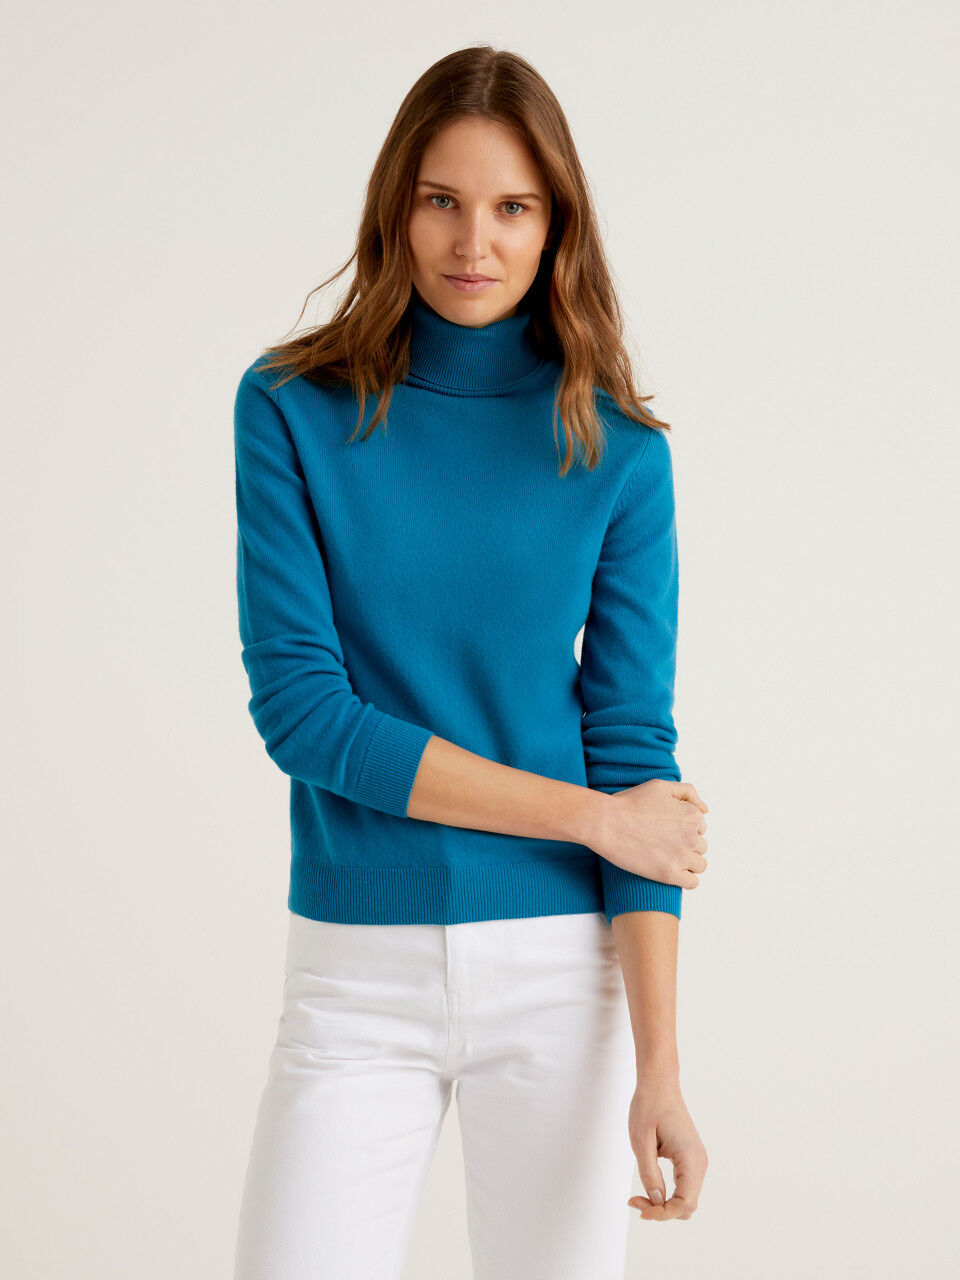 Teal turtleneck sweater in pure Merino wool